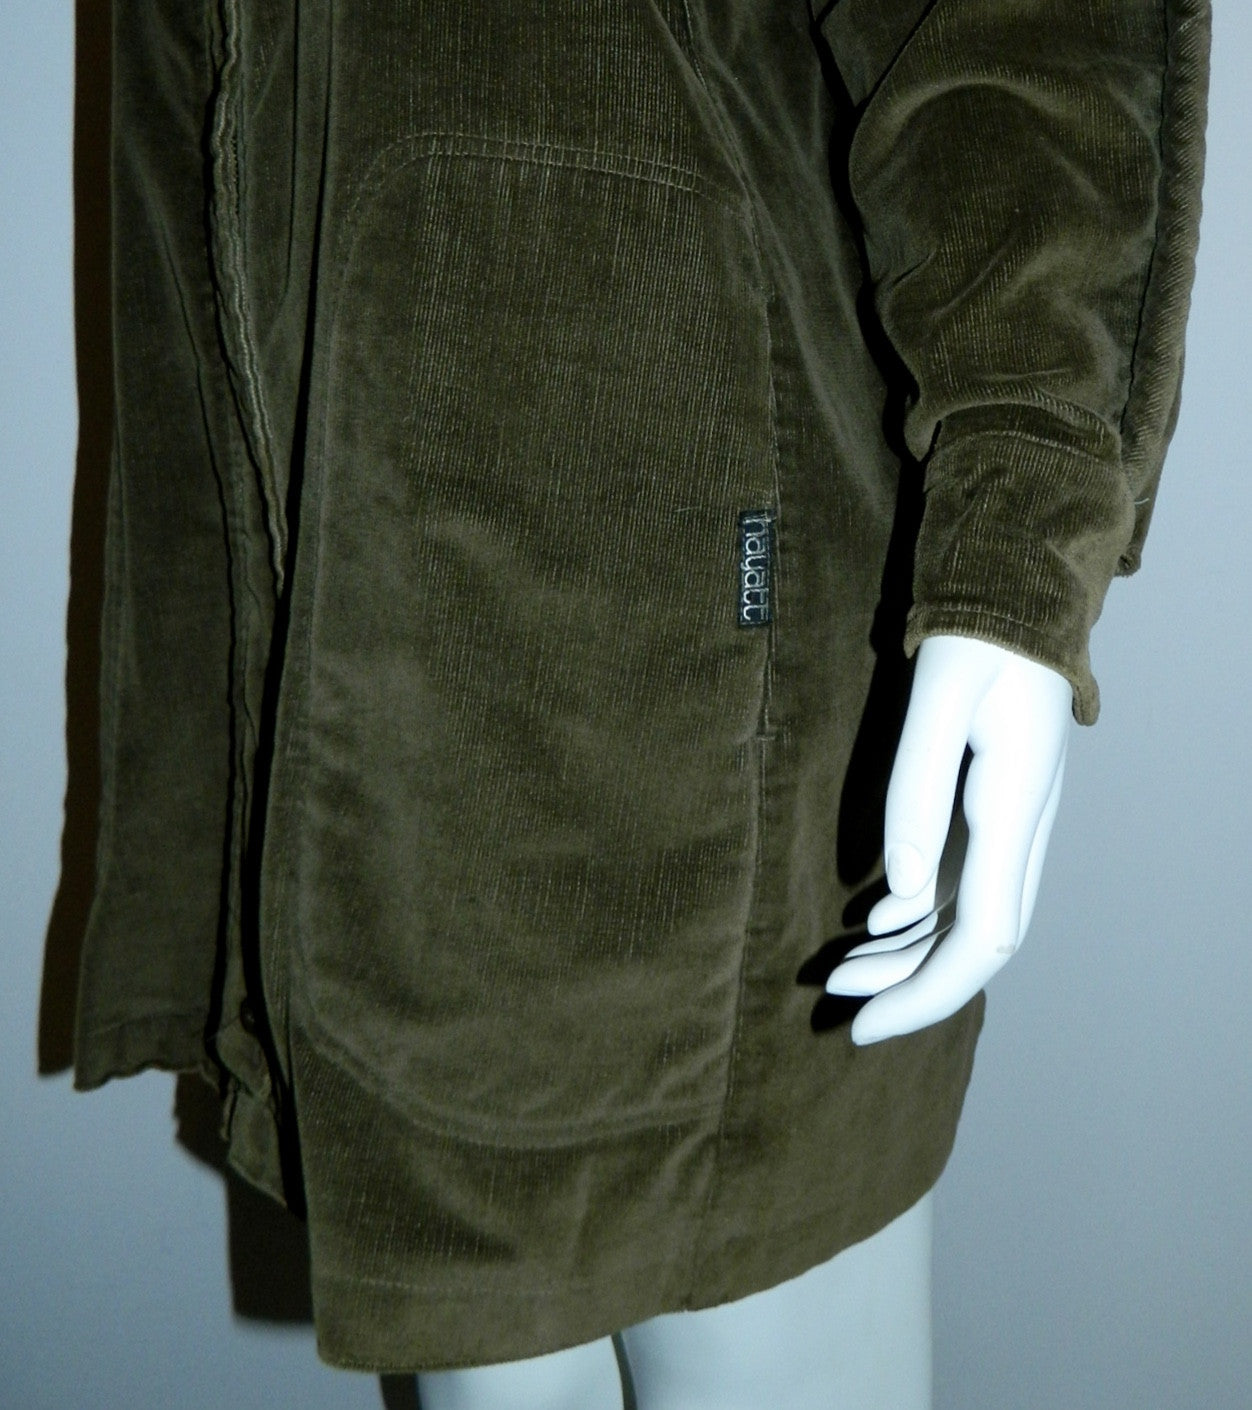 vintage 1980s olive green car coat Lester Hayatt corduroy barn jacket swing coat M OSFM